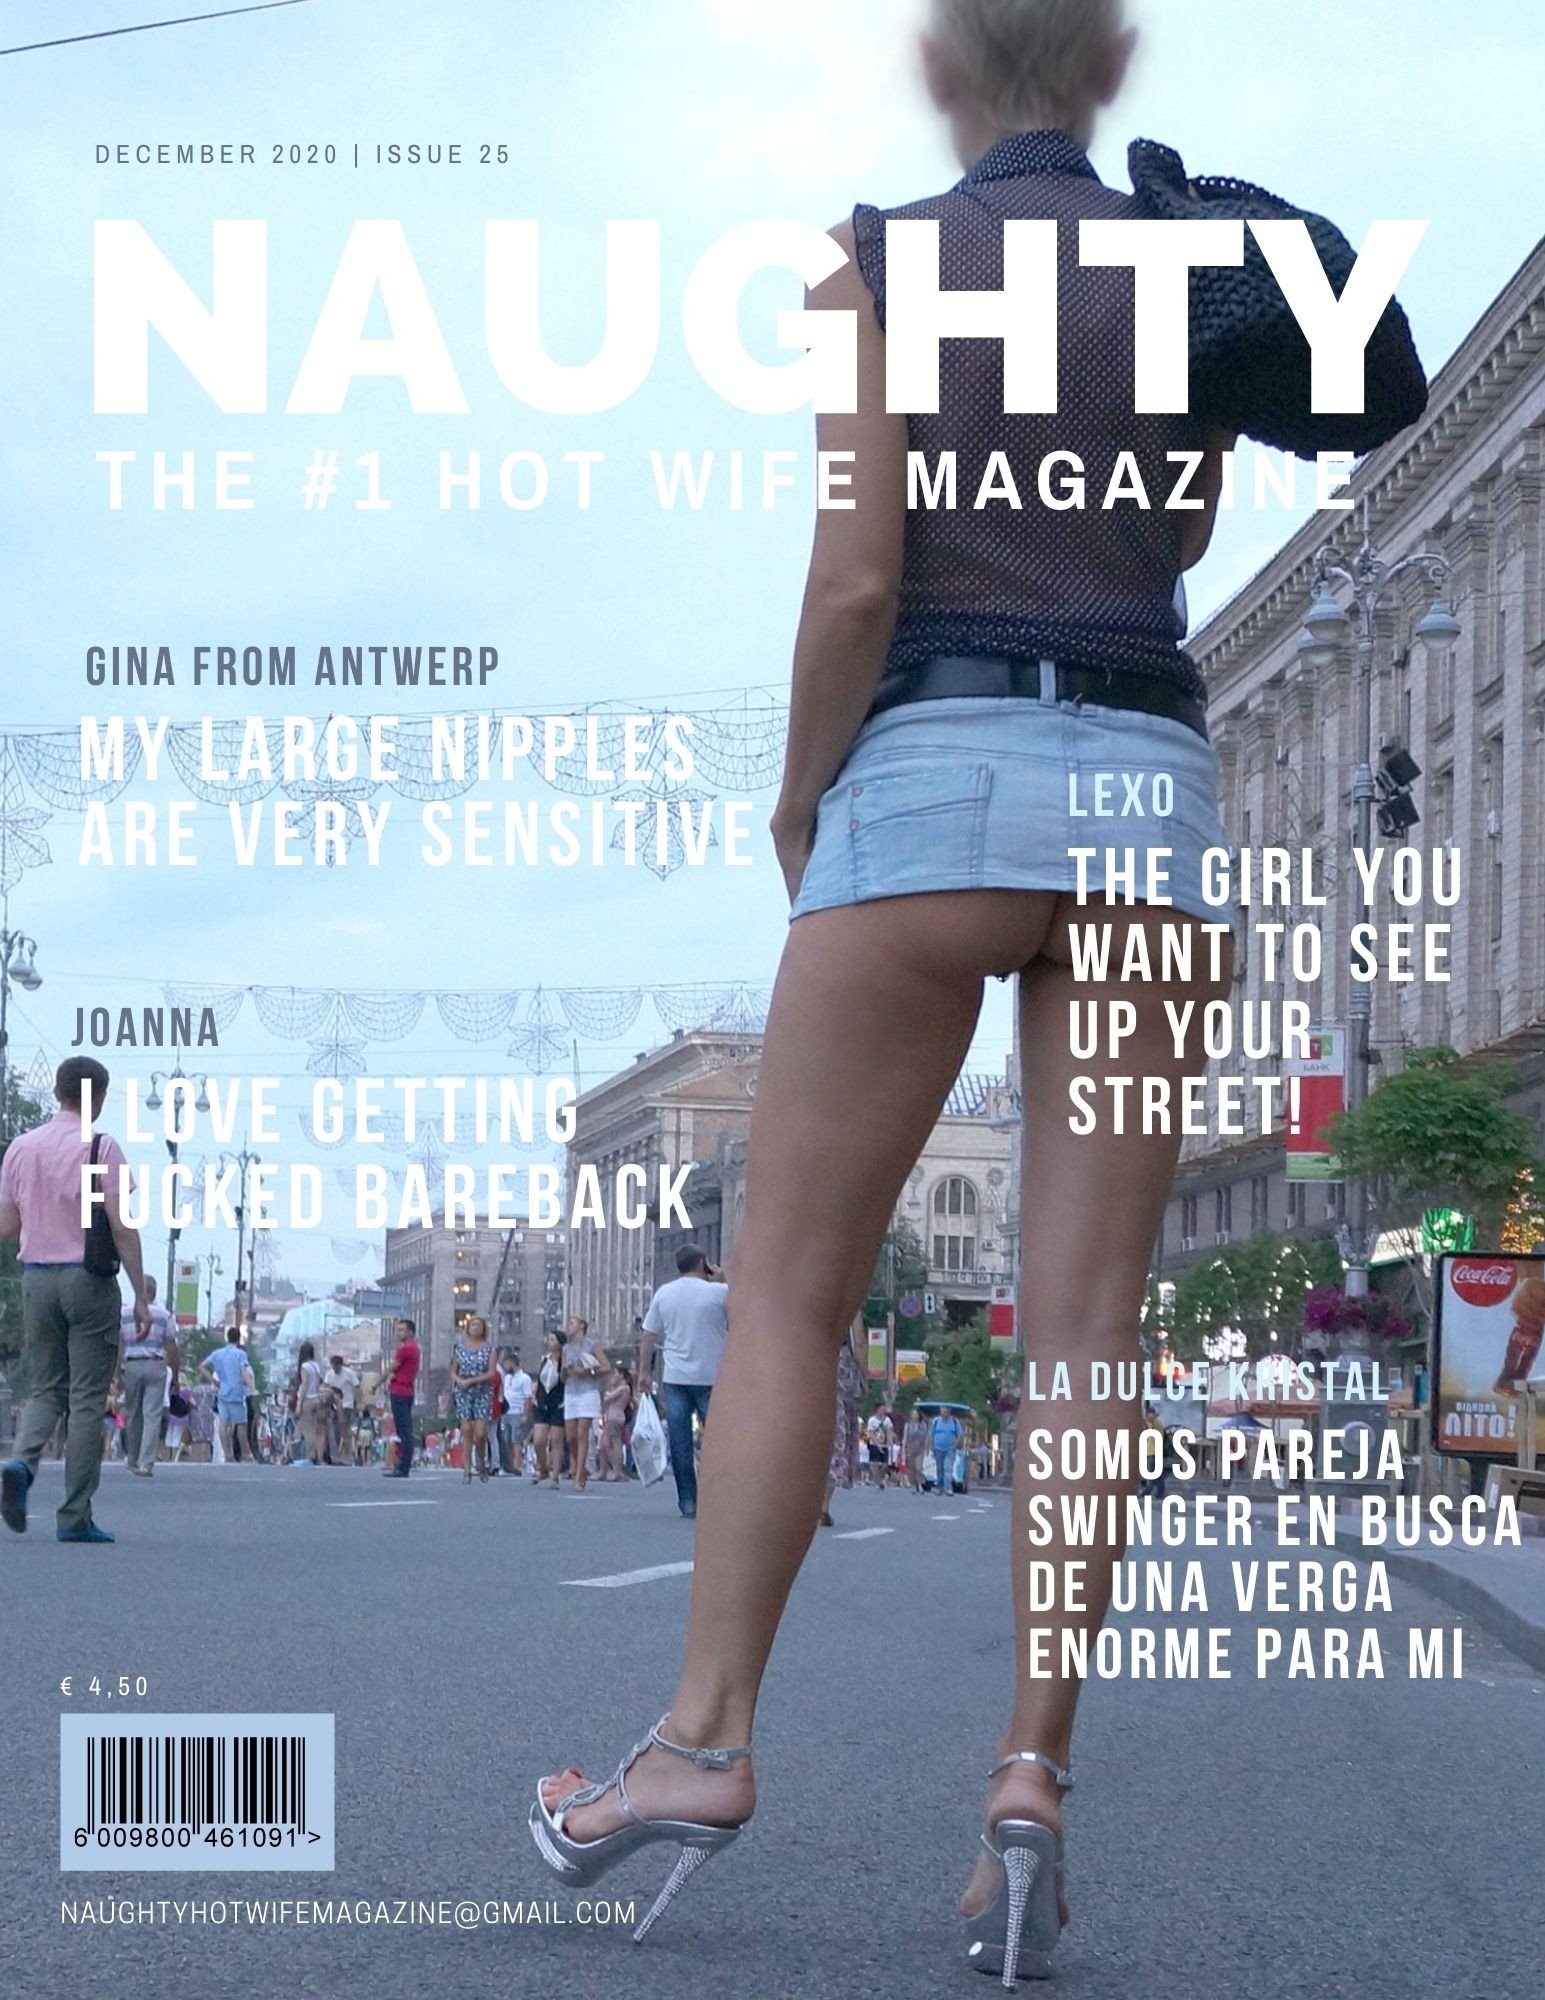 Photo by NaughtyMagazine with the username @NaughtyMagazine,  November 1, 2020 at 9:13 AM